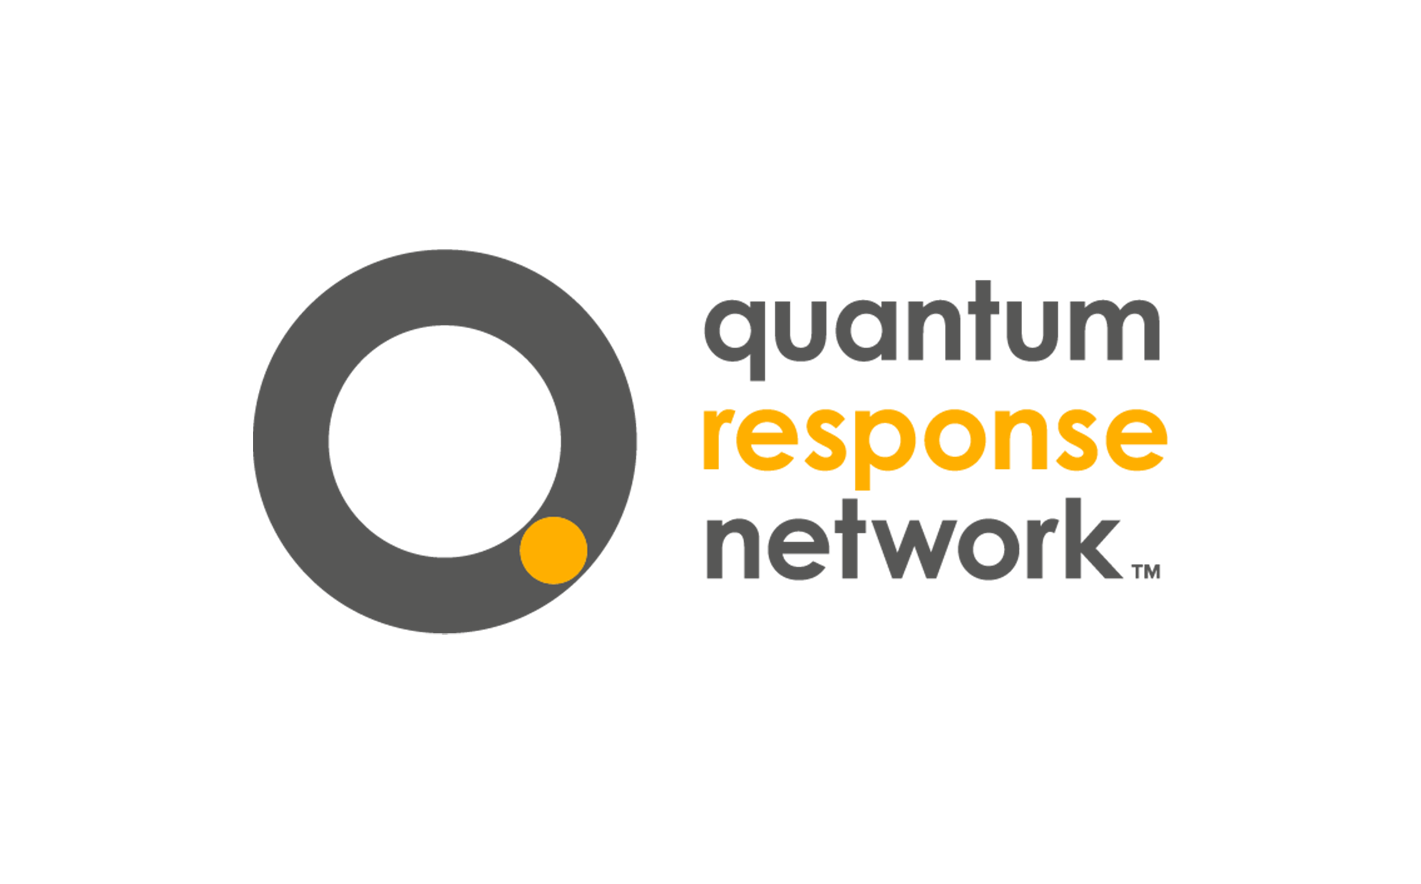 Logo de Quantum Response Network